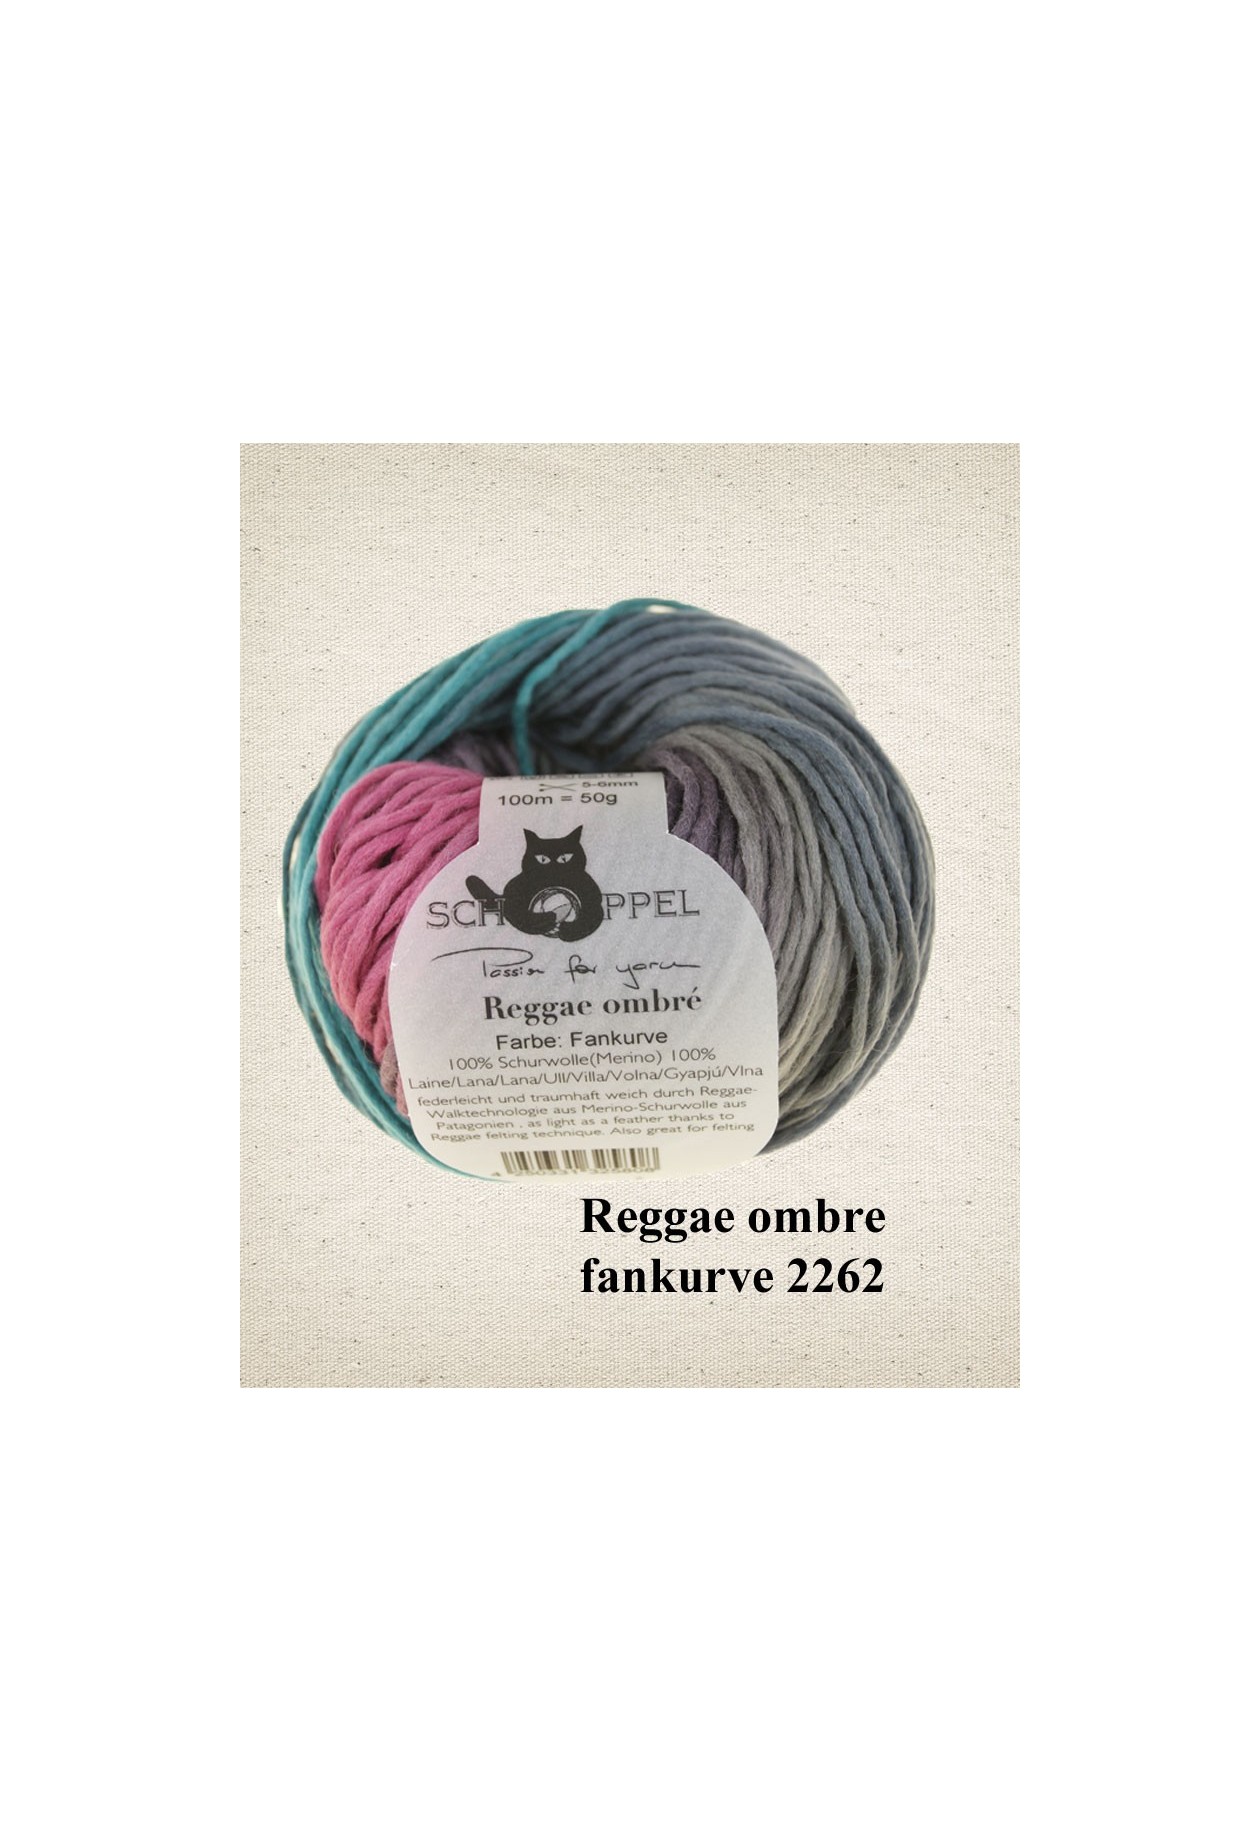 Reggae Ombre Yarn - Multicolor (# 1505), Schoppel Wolle